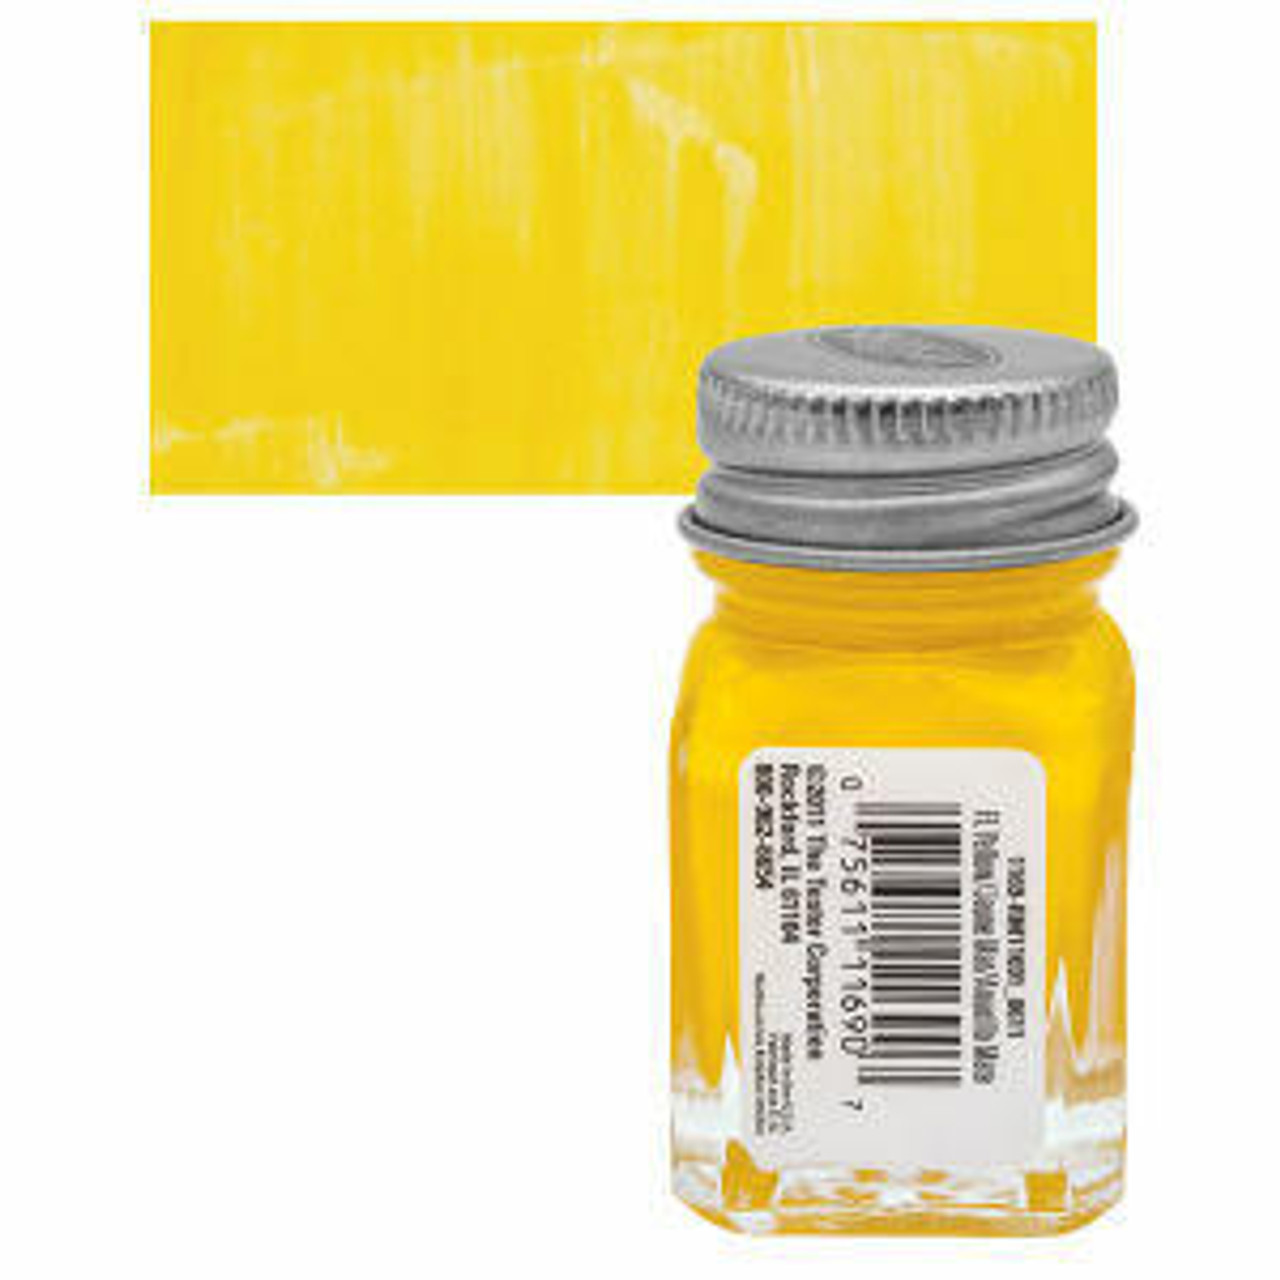 Testors Enamel Paint - Yellow